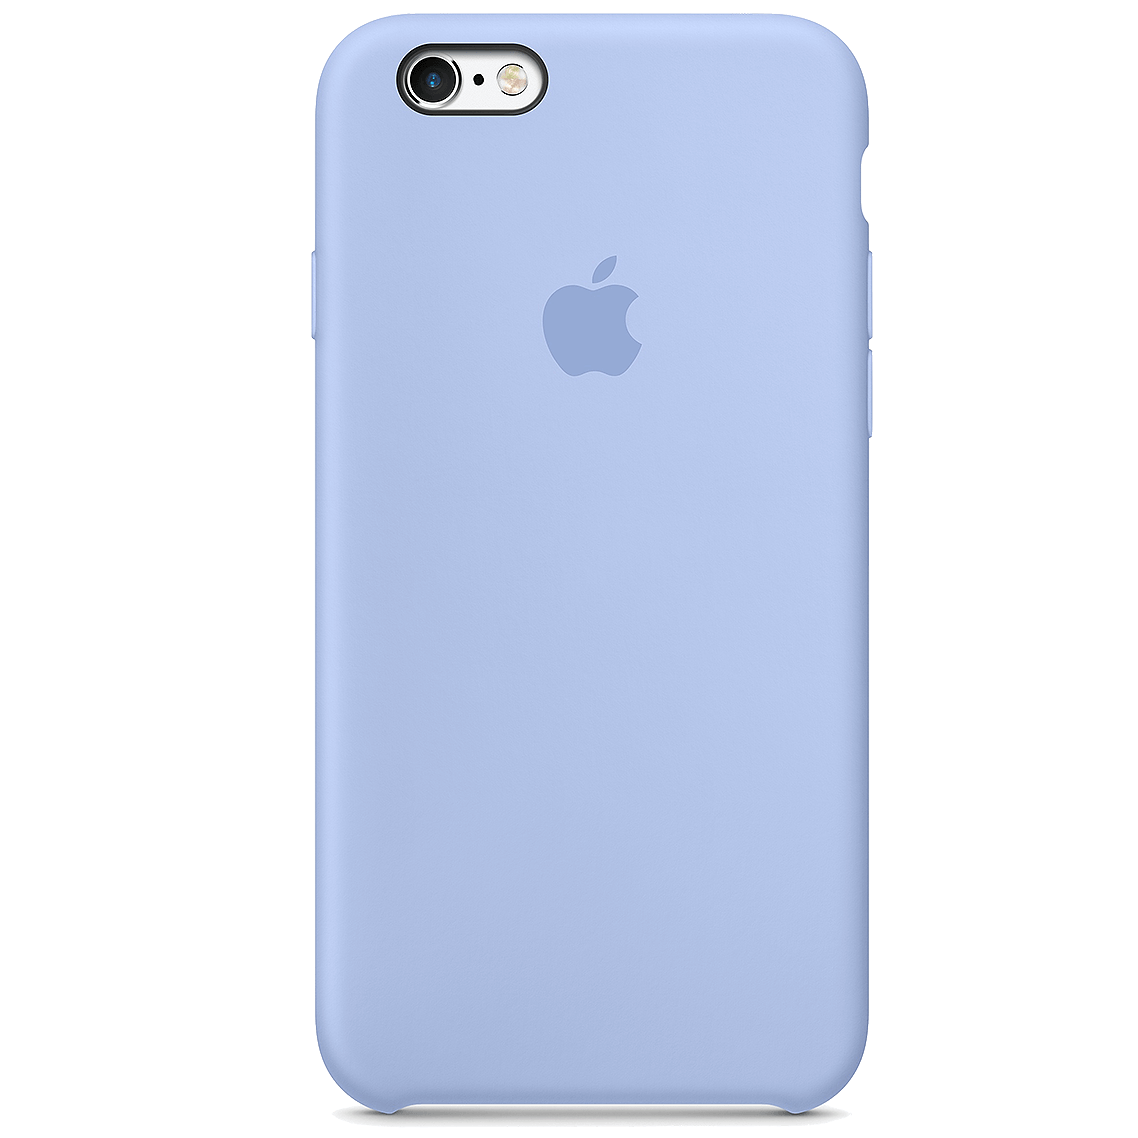 Силиконовый чехол Apple iPhone 6S Plus Silicone Case - Lilac (MM682ZM/A) для iPhone 6 Plus/6S Plus